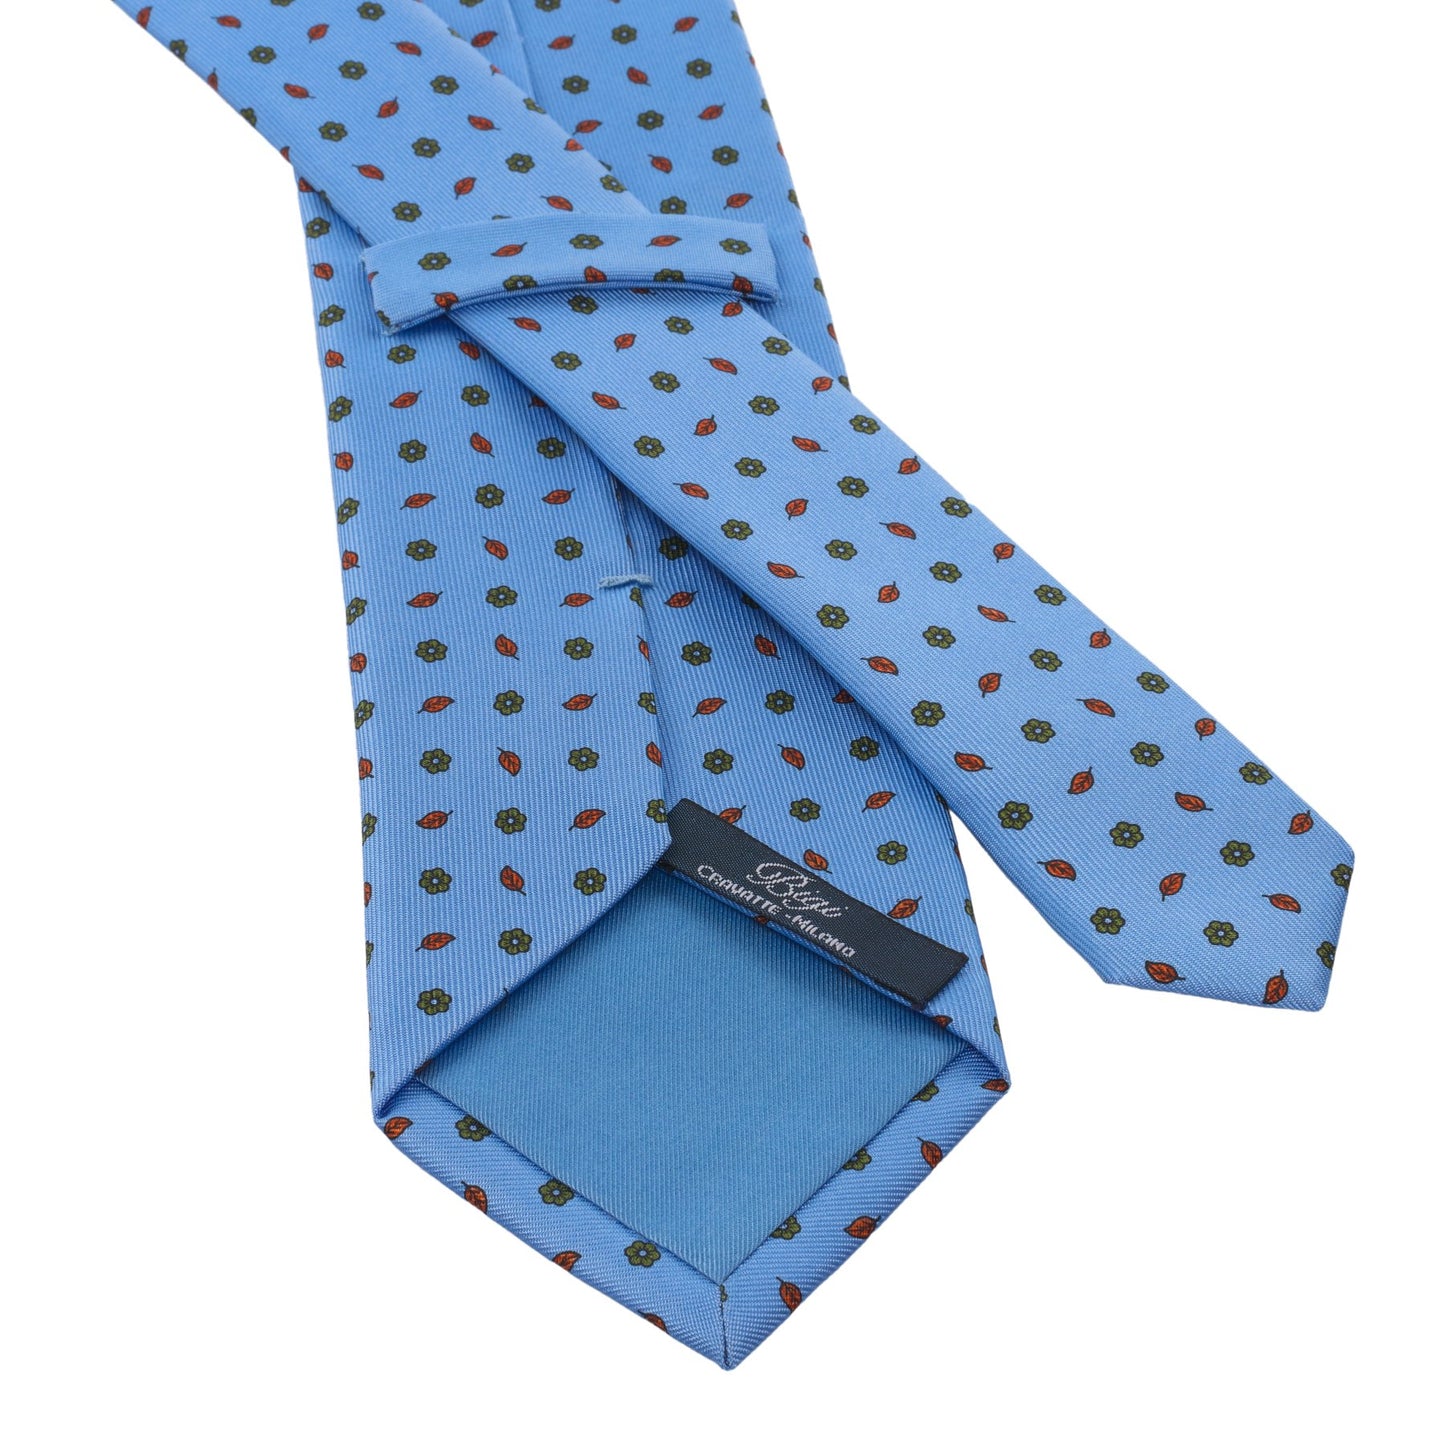 Bigi Printed Blue Tie with Leaf Design - SARTALE